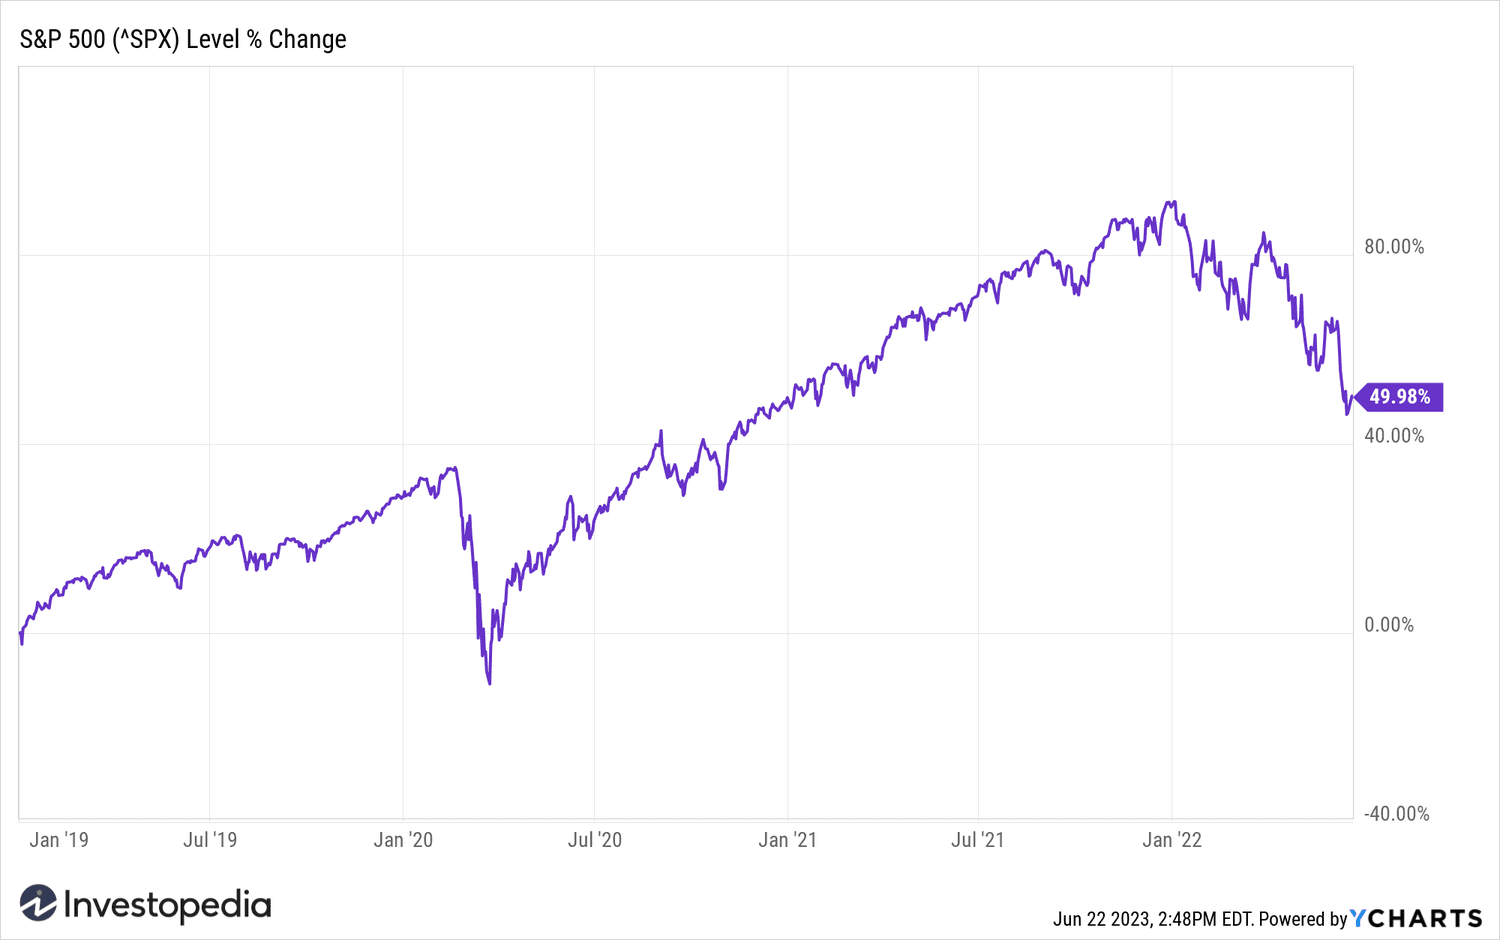 S&P 500 level of percent change